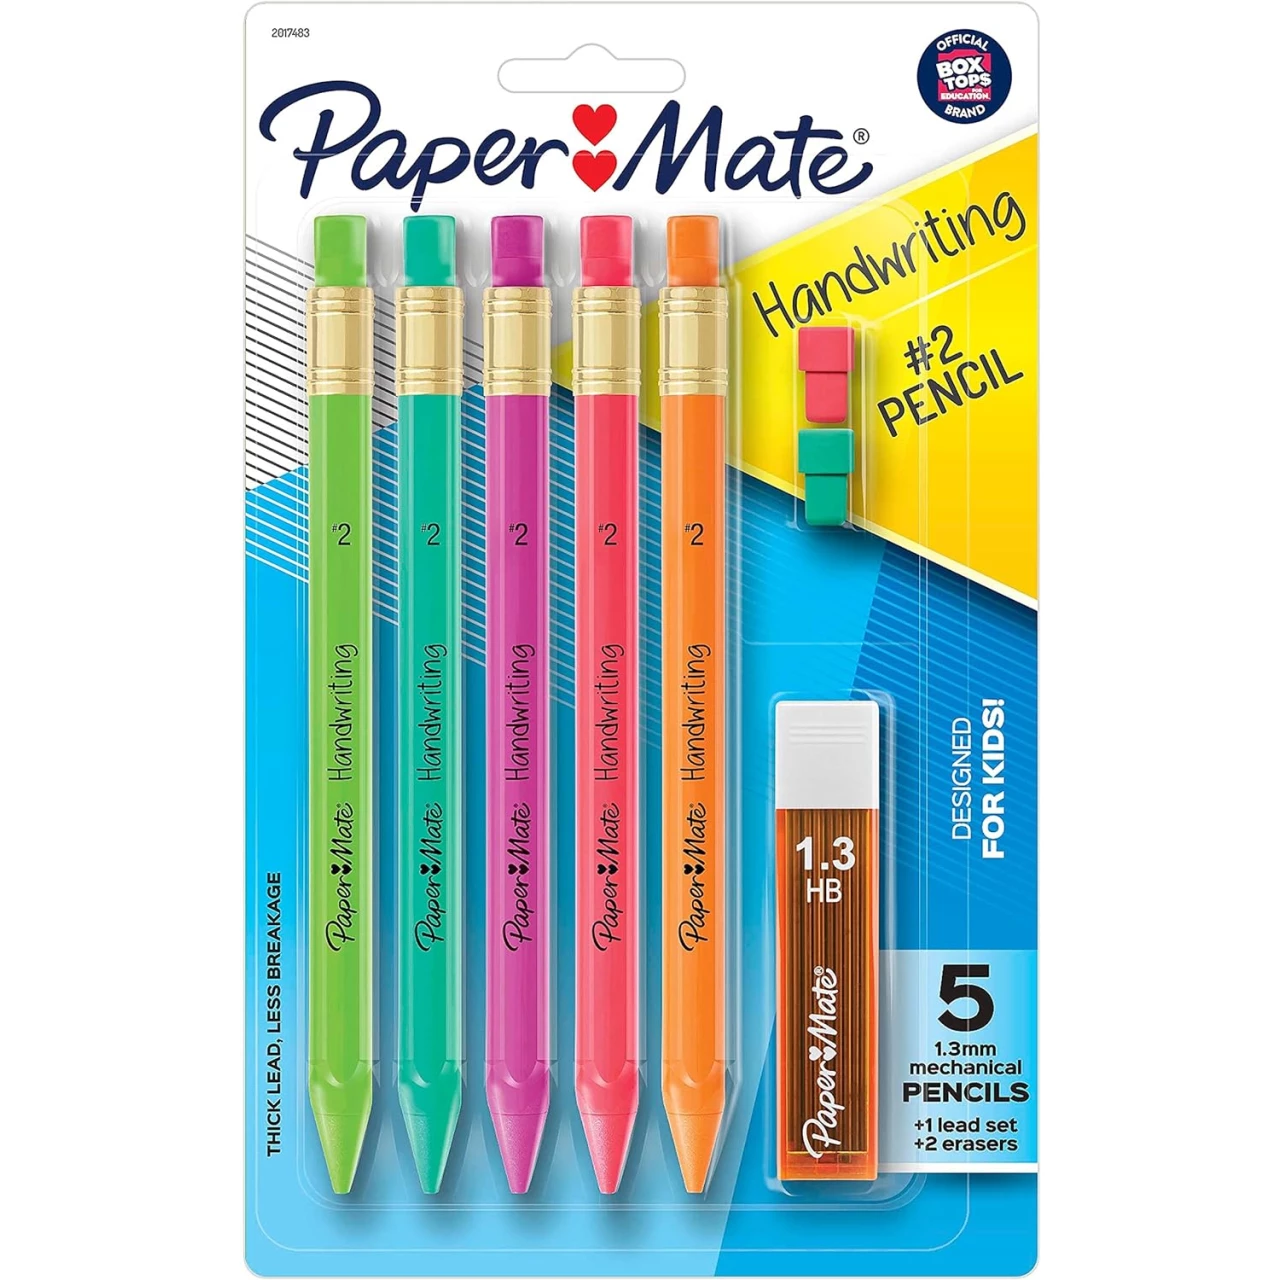 Paper Mate Handwriting Triangular Mechanical Pencil Set with Lead &amp; Eraser Refills, 1.3mm, Fun Barrel Colors, 8 Count